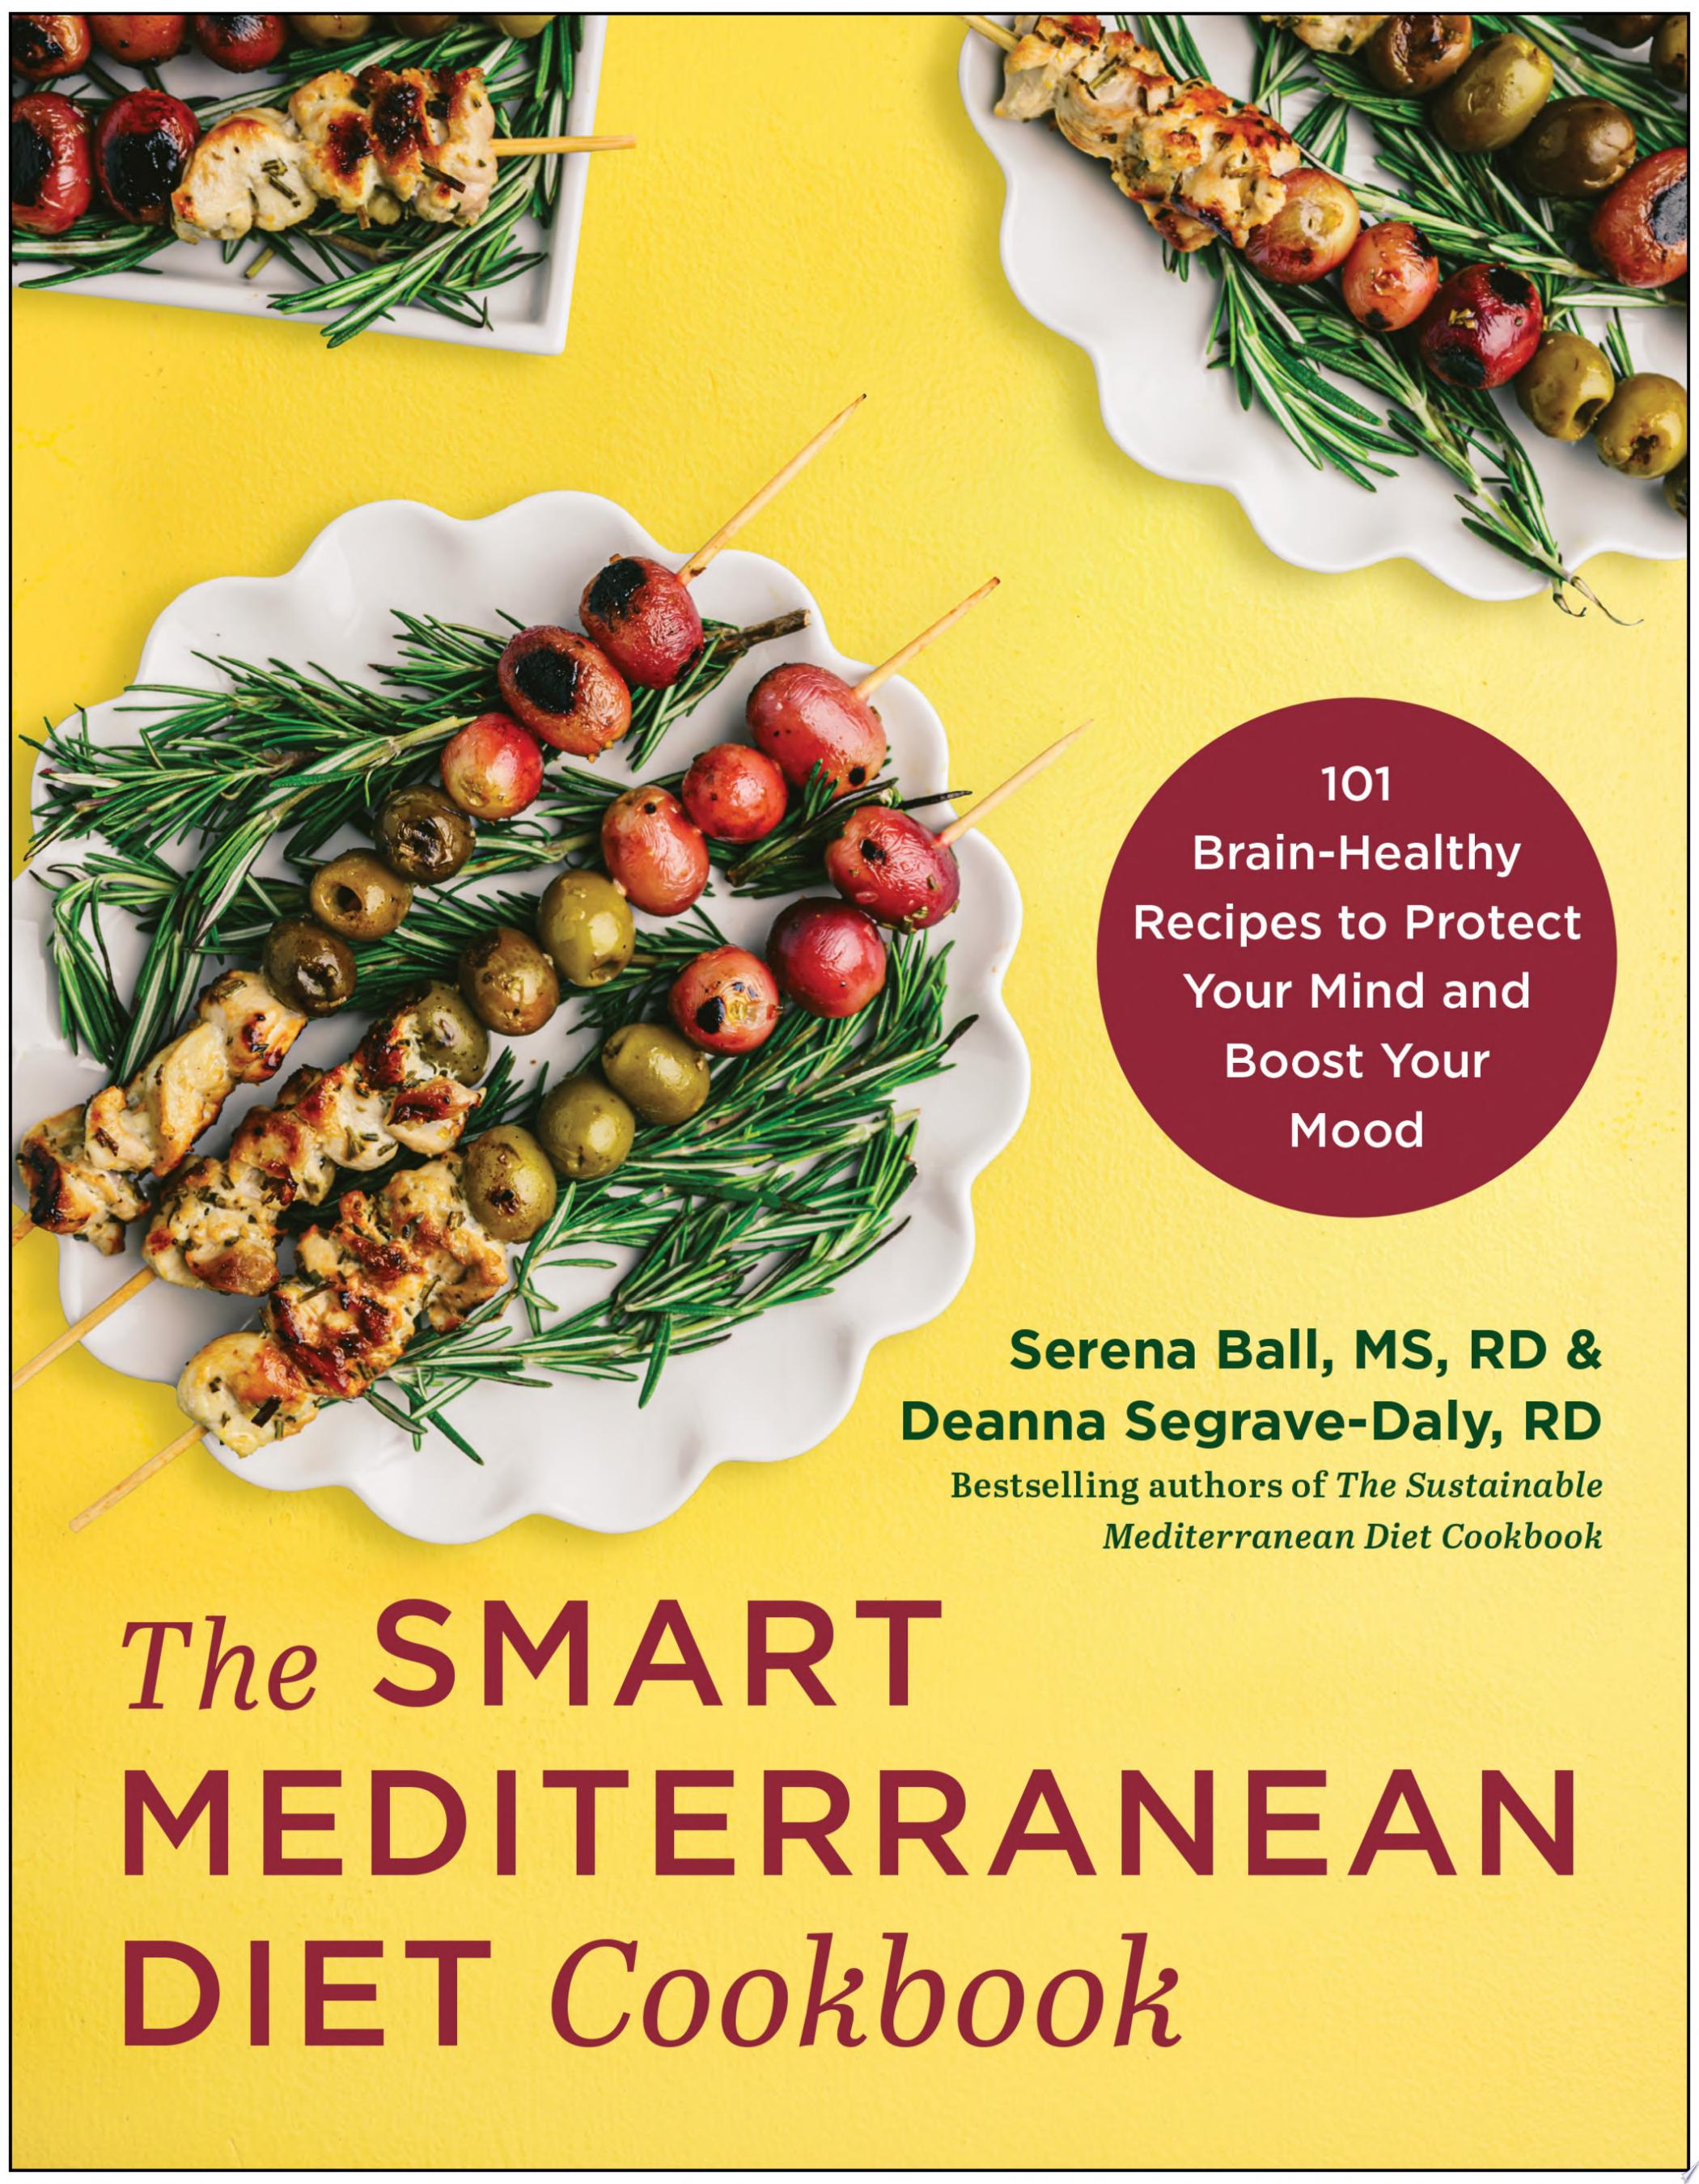 Image for "The Smart Mediterranean Diet Cookbook"